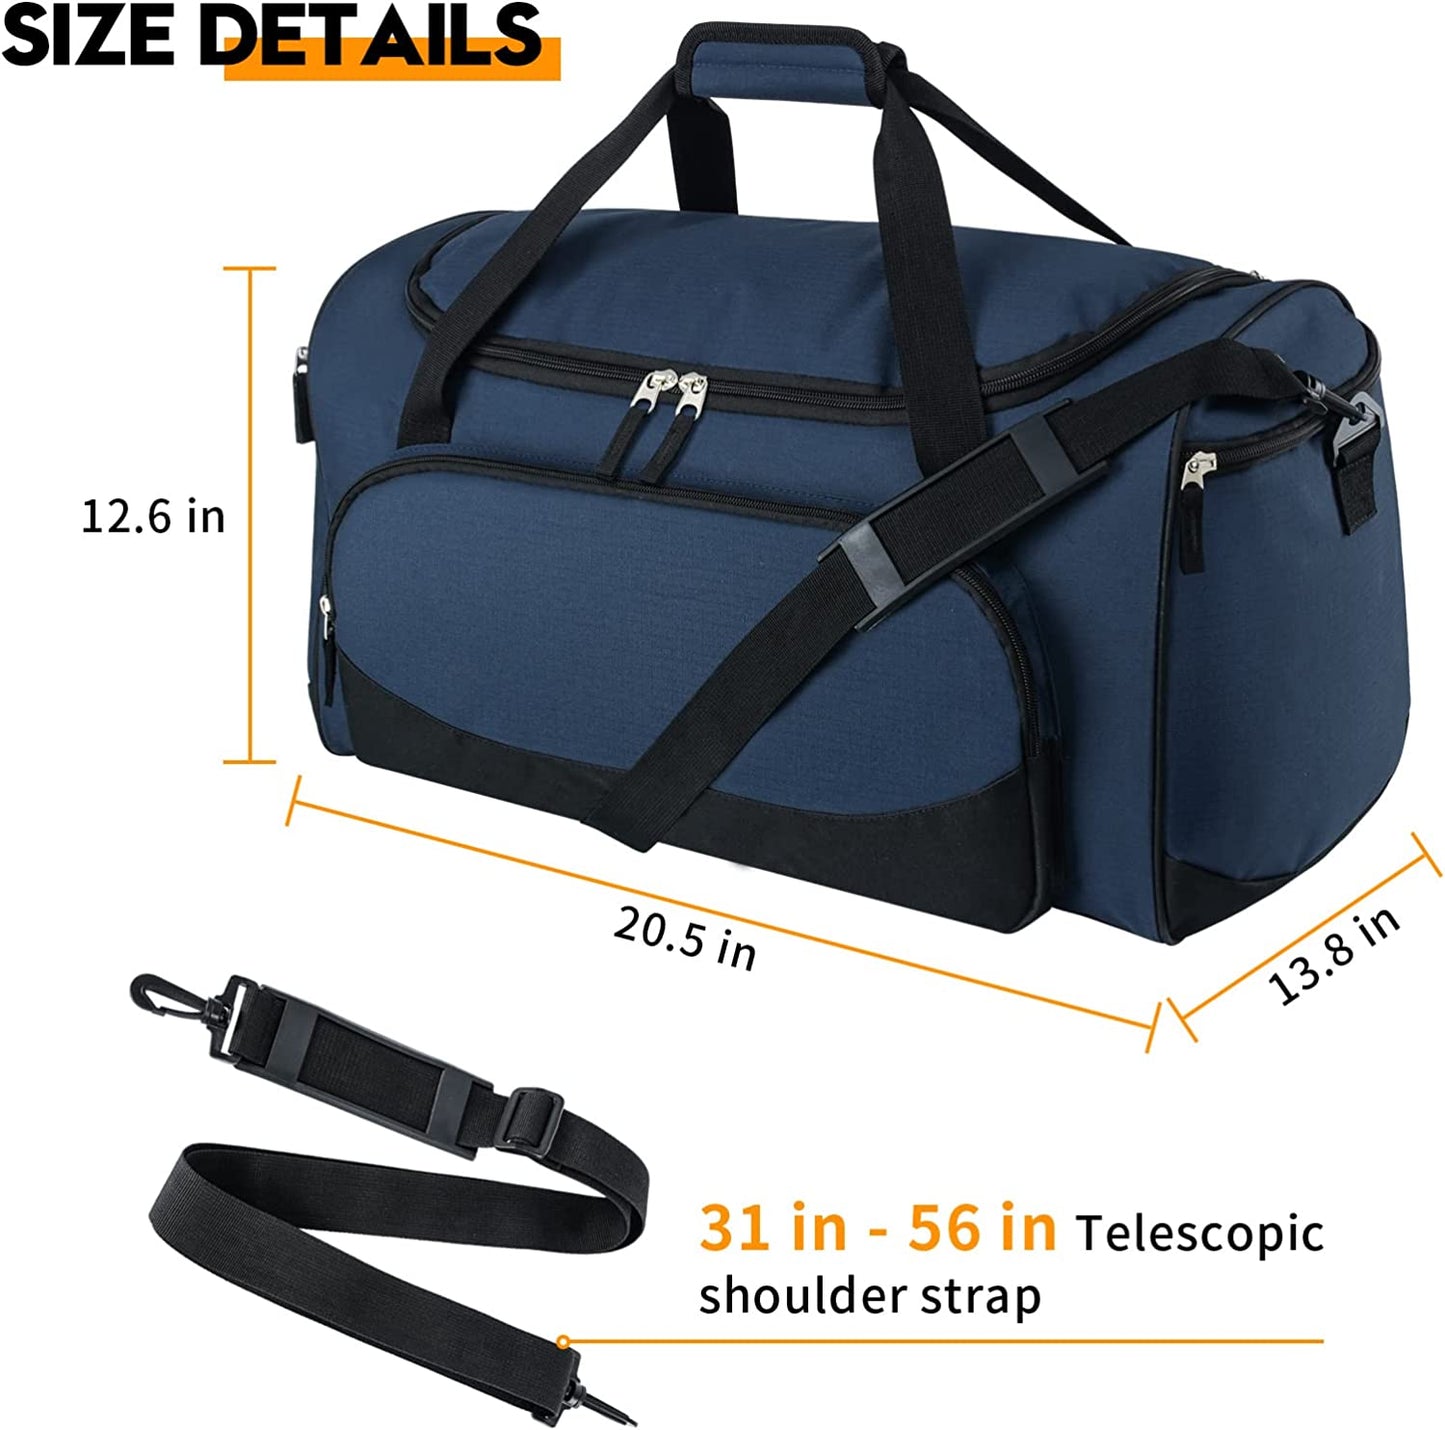 Gym Bag for Men Women Large Sports Duffle Bags 55L Travel Duffel Bag Navy Blue